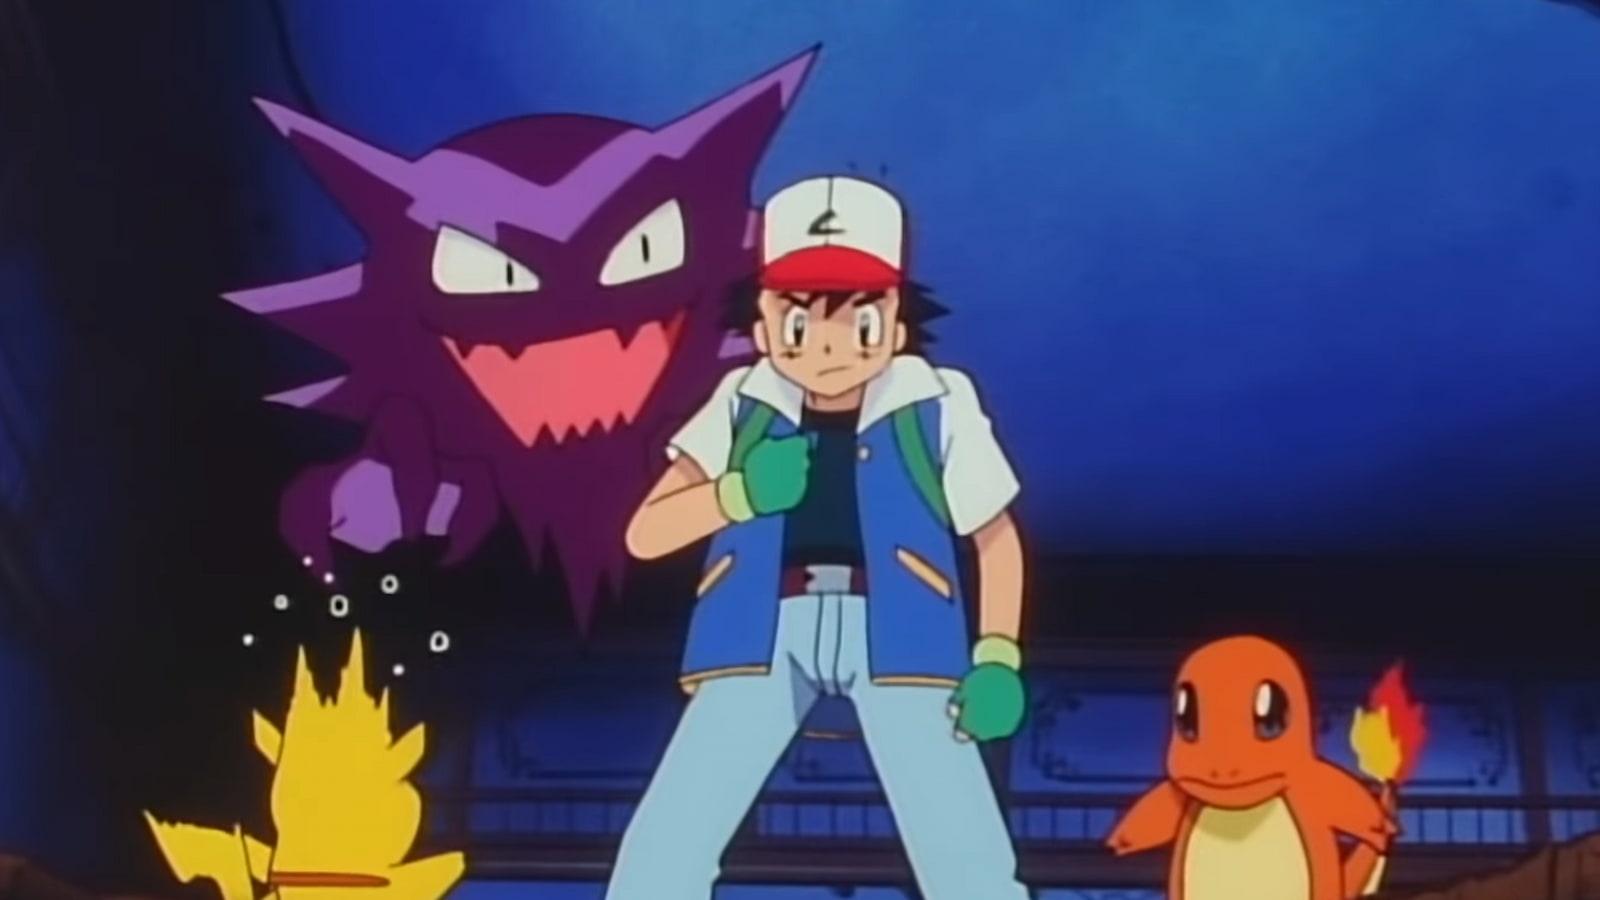 Haunter following Ash, Pikachu, and Charmander in the Pokemon anime